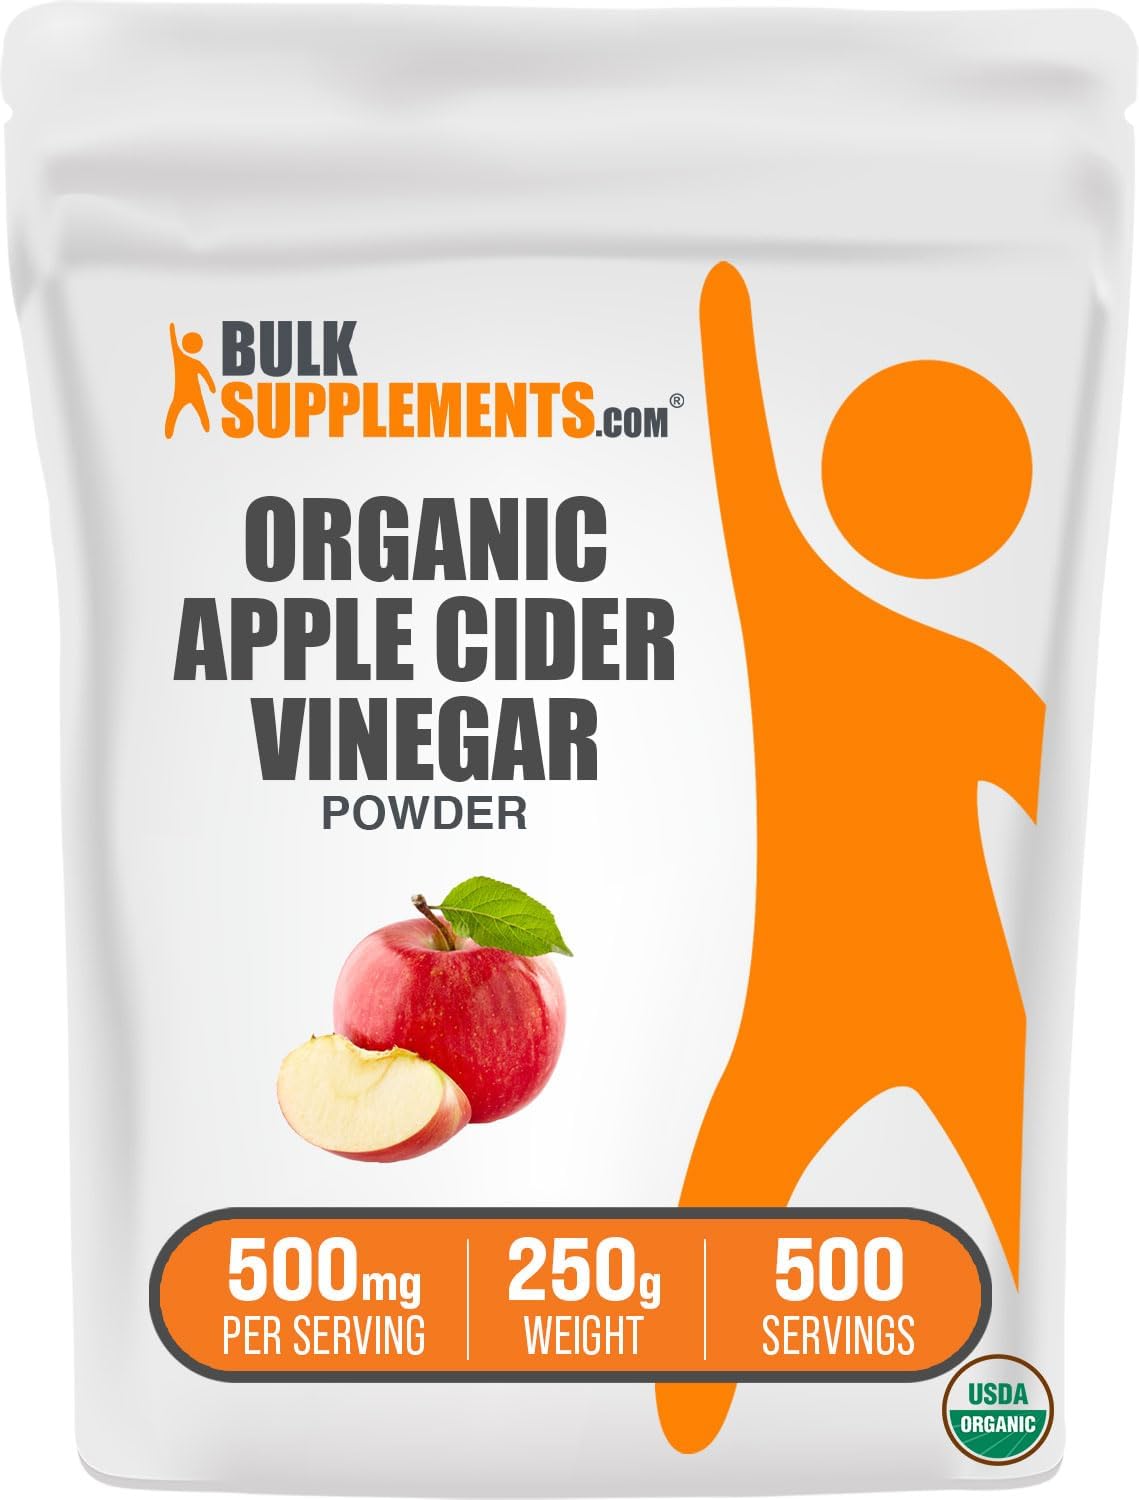 BULKSUPPLEMENTS.COM Organic Apple Cider Vinegar Powder - Apple Cider Vinegar Supplement, ACV for Digestive Support, Apple Cider Vinegar Organic - Vegan-Friendly, 500mg per Serving, 250g